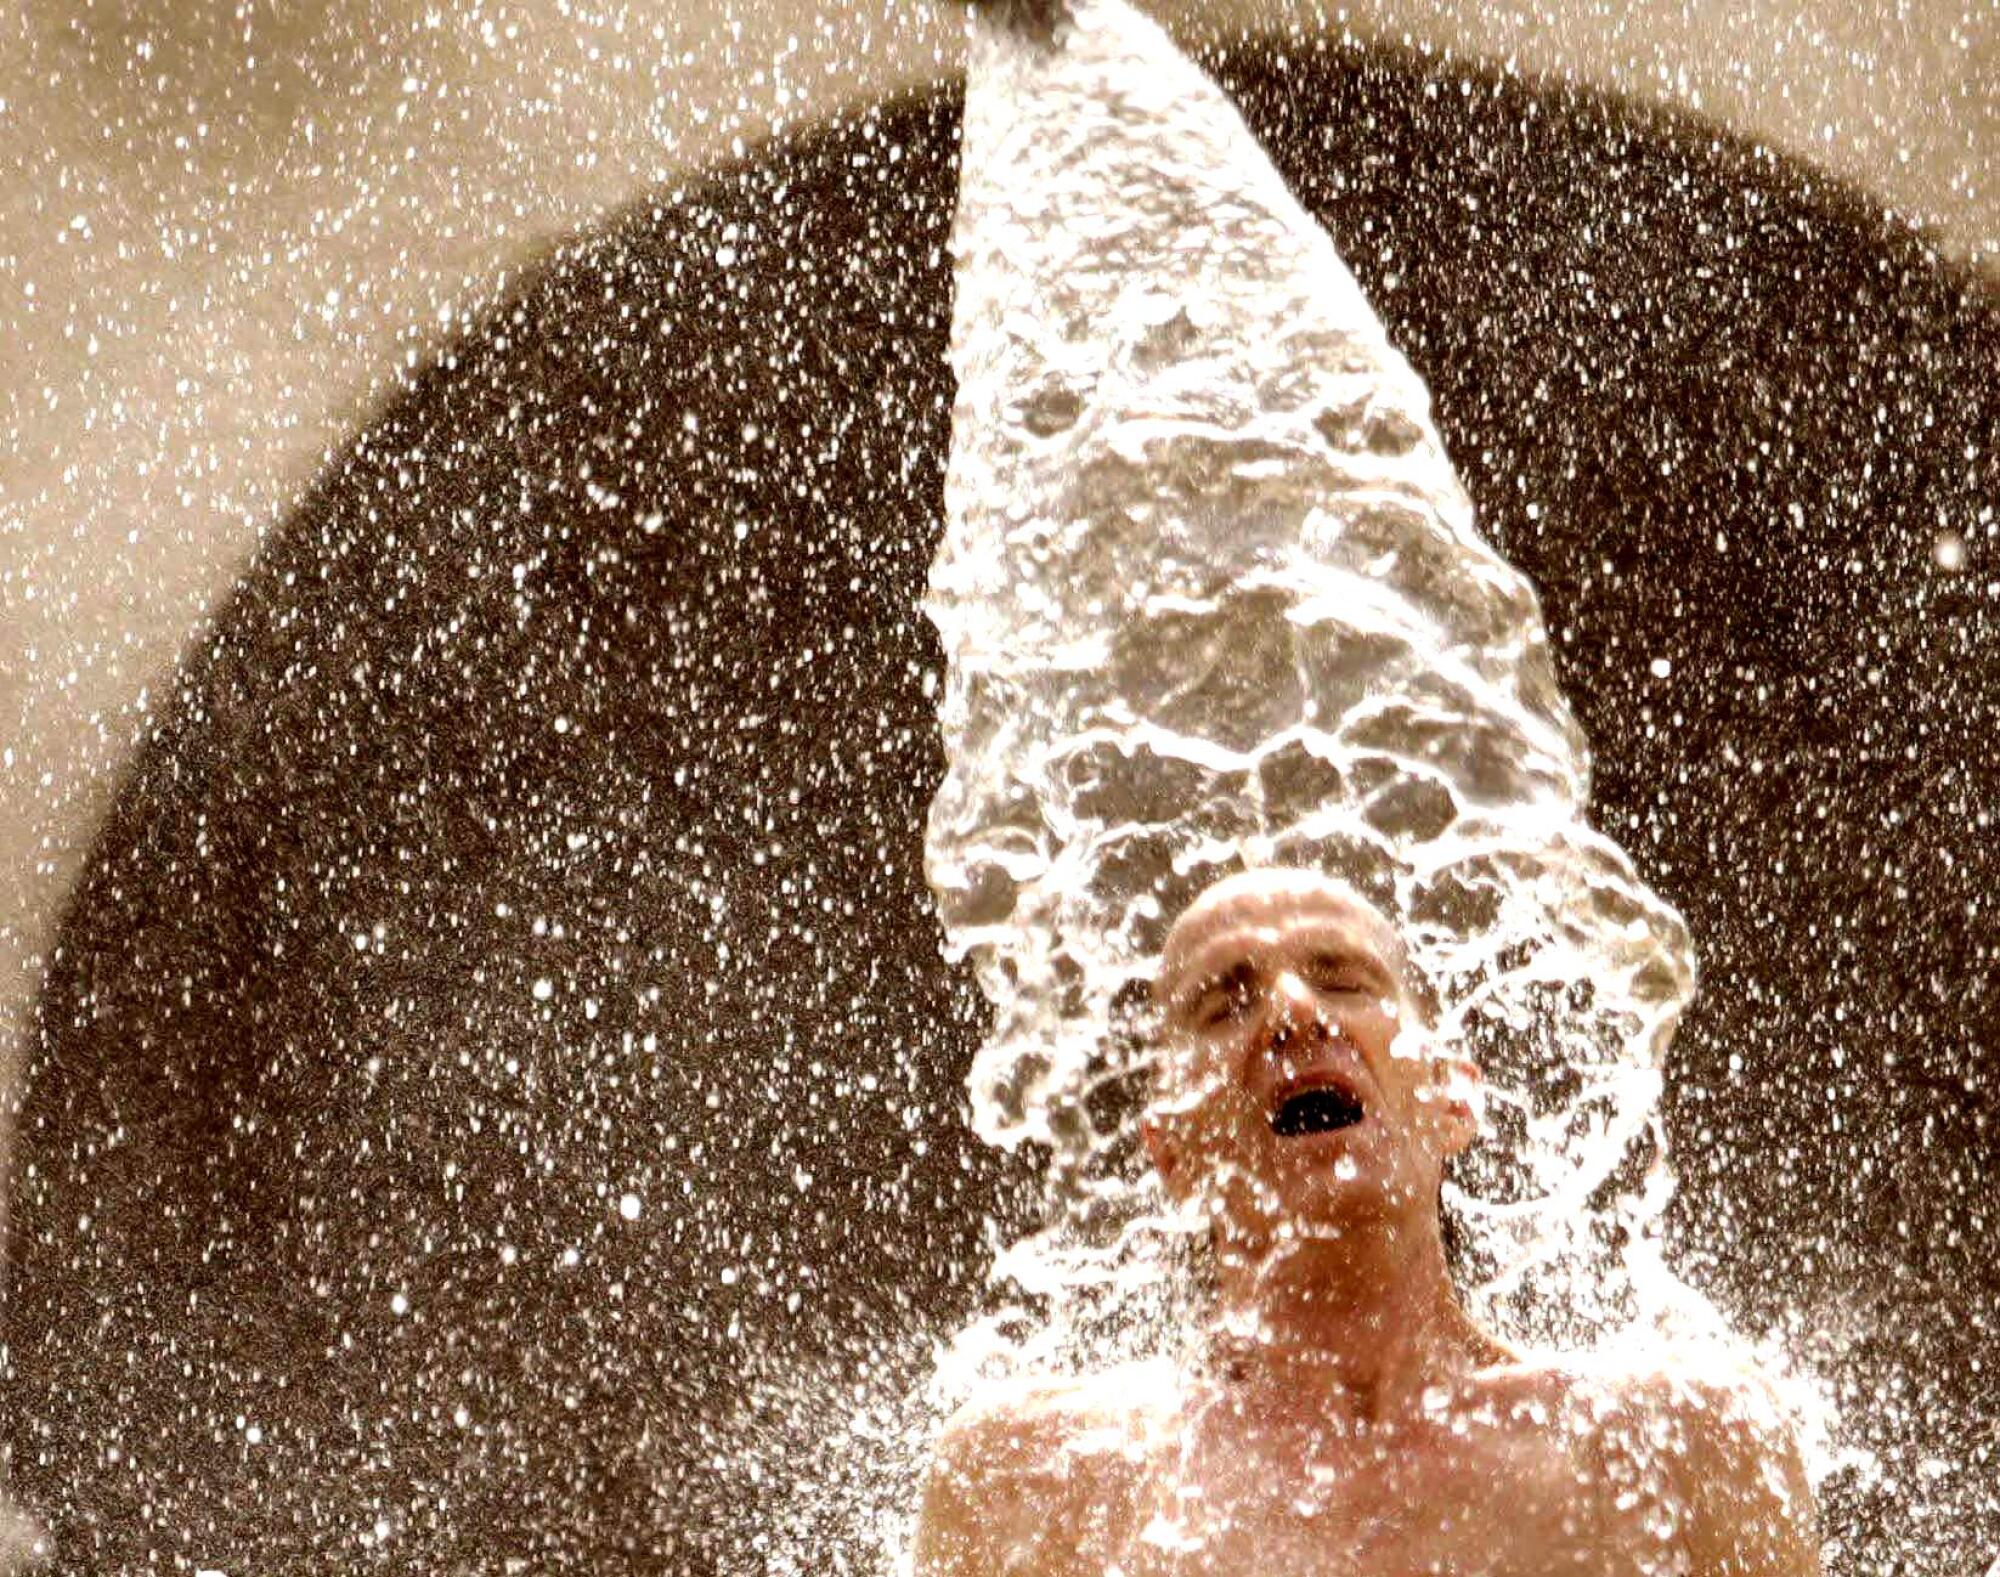 Water splashes down onto a shirtless man